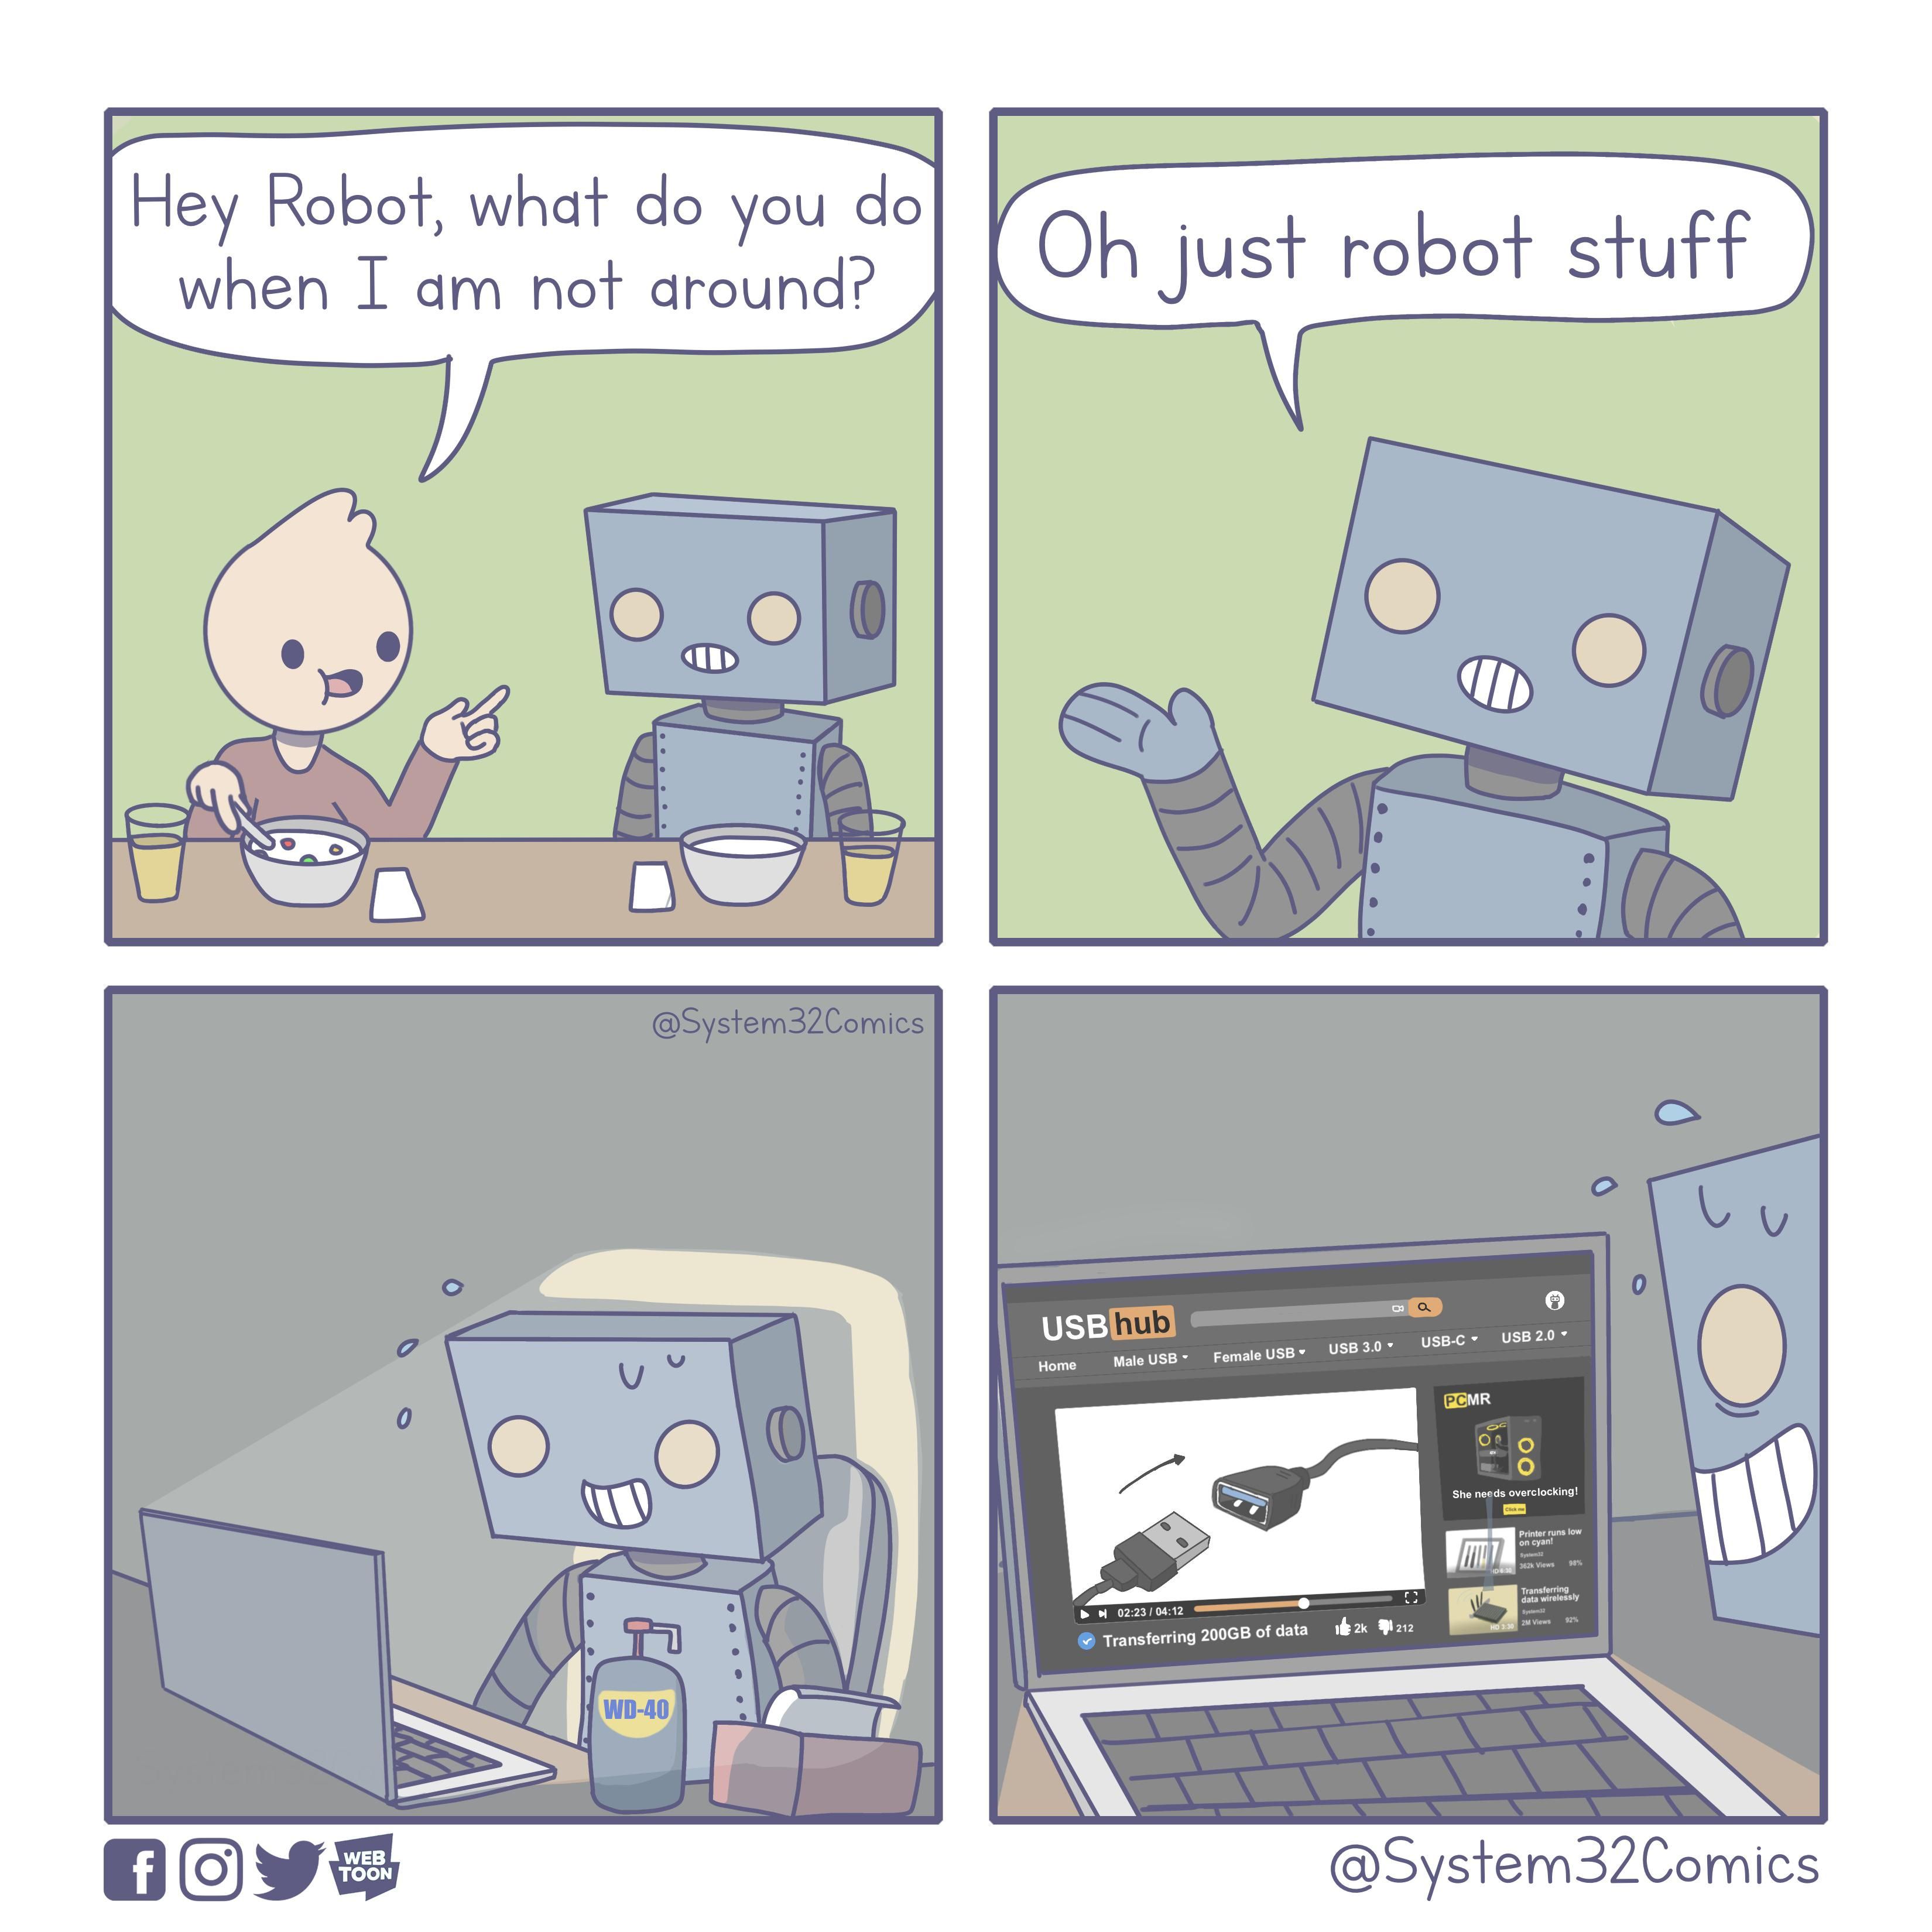 Just Robot Stuff